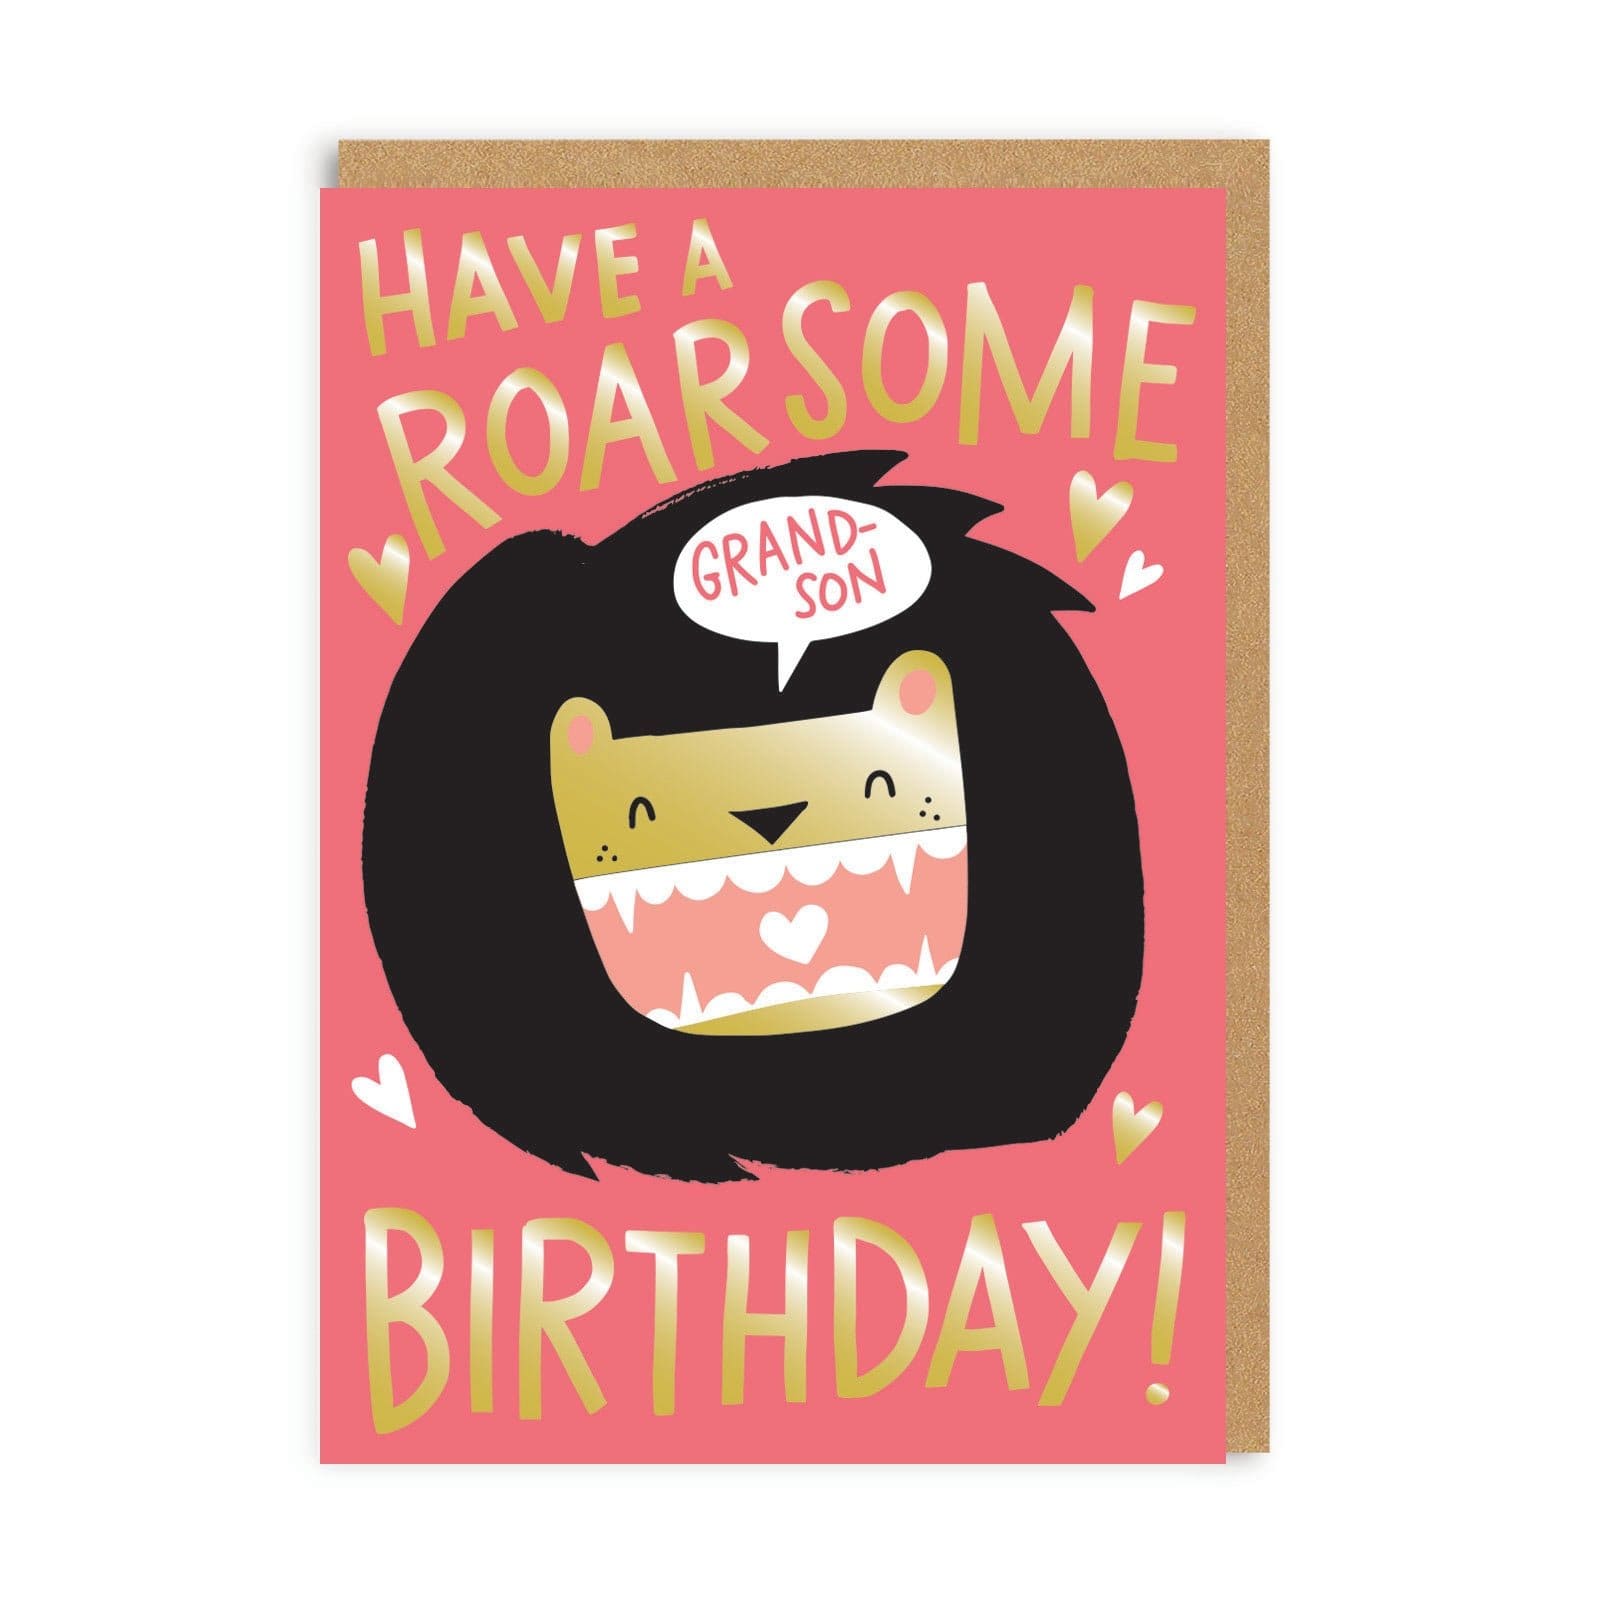 Grandson Roarsome Birthday Greeting Card